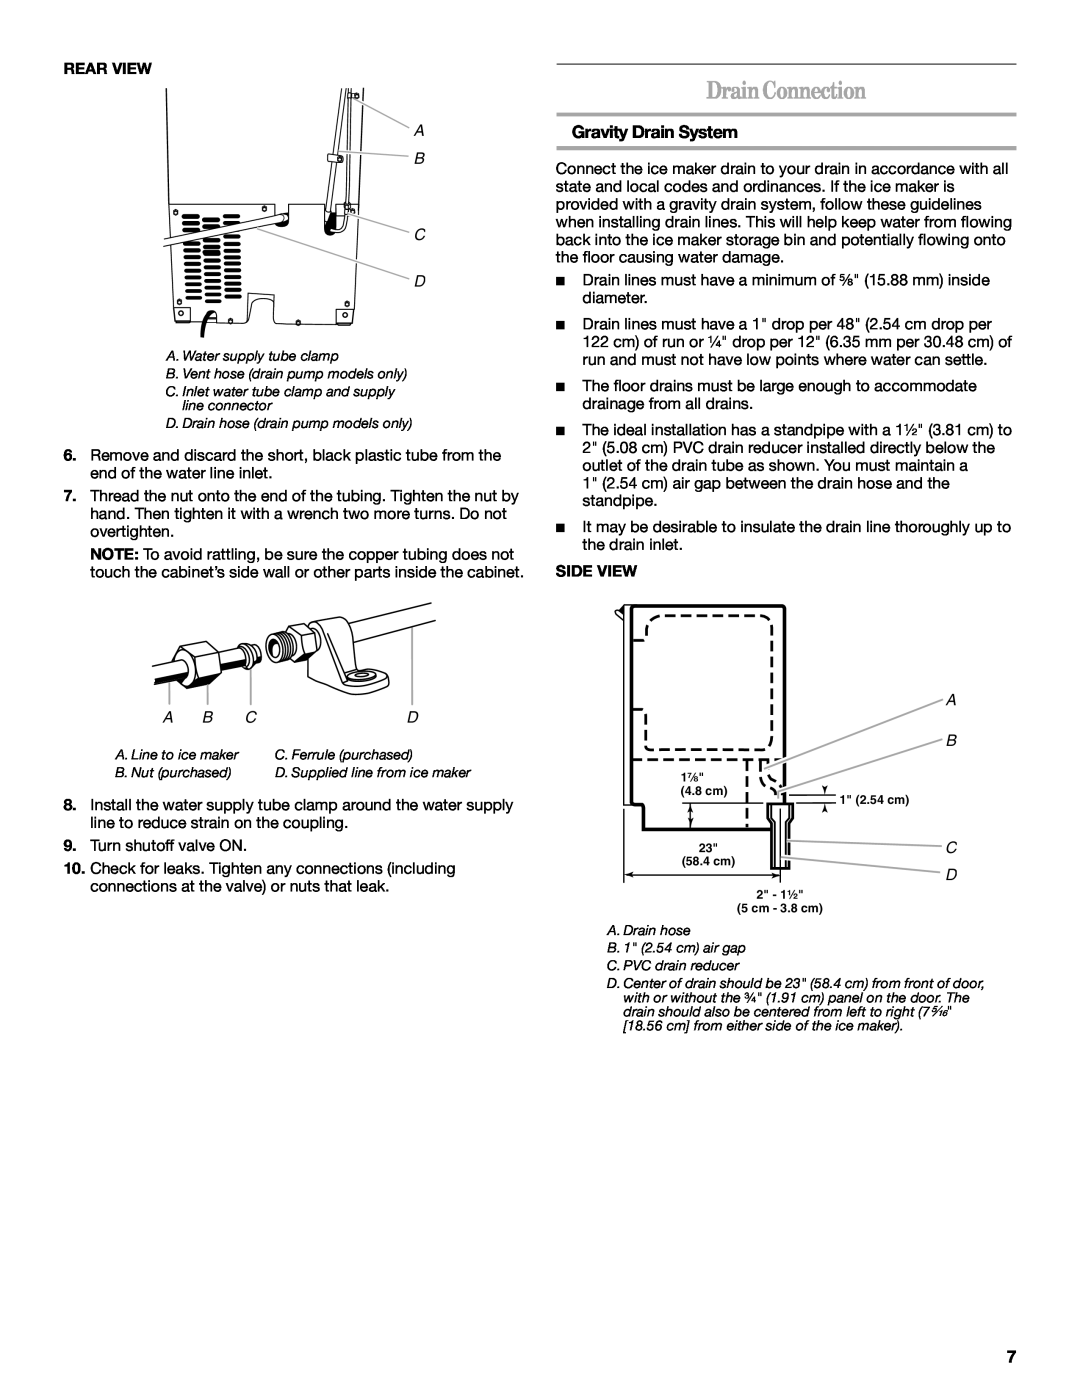 Whirlpool W10206421B manual DrainConnection, Gravity Drain System, A B C D 